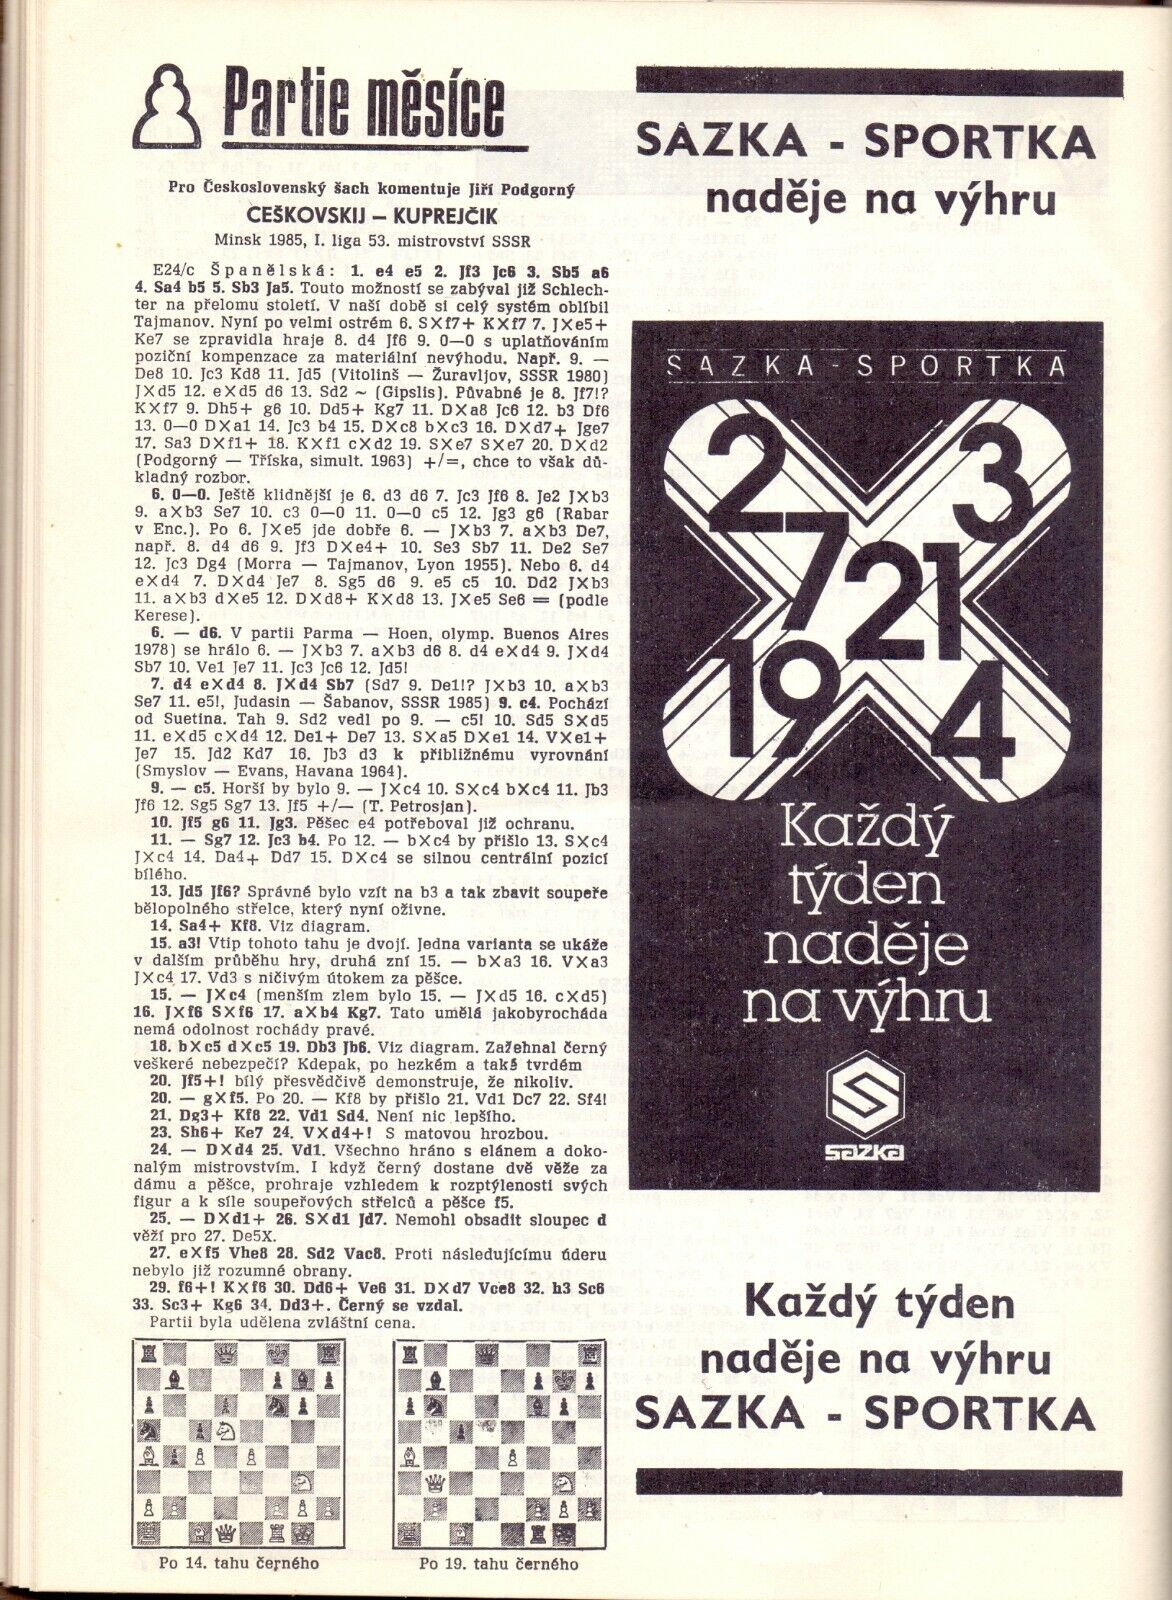 11263.Czech chess magazine «Československy šach». Annual sets 1985 and 1986.